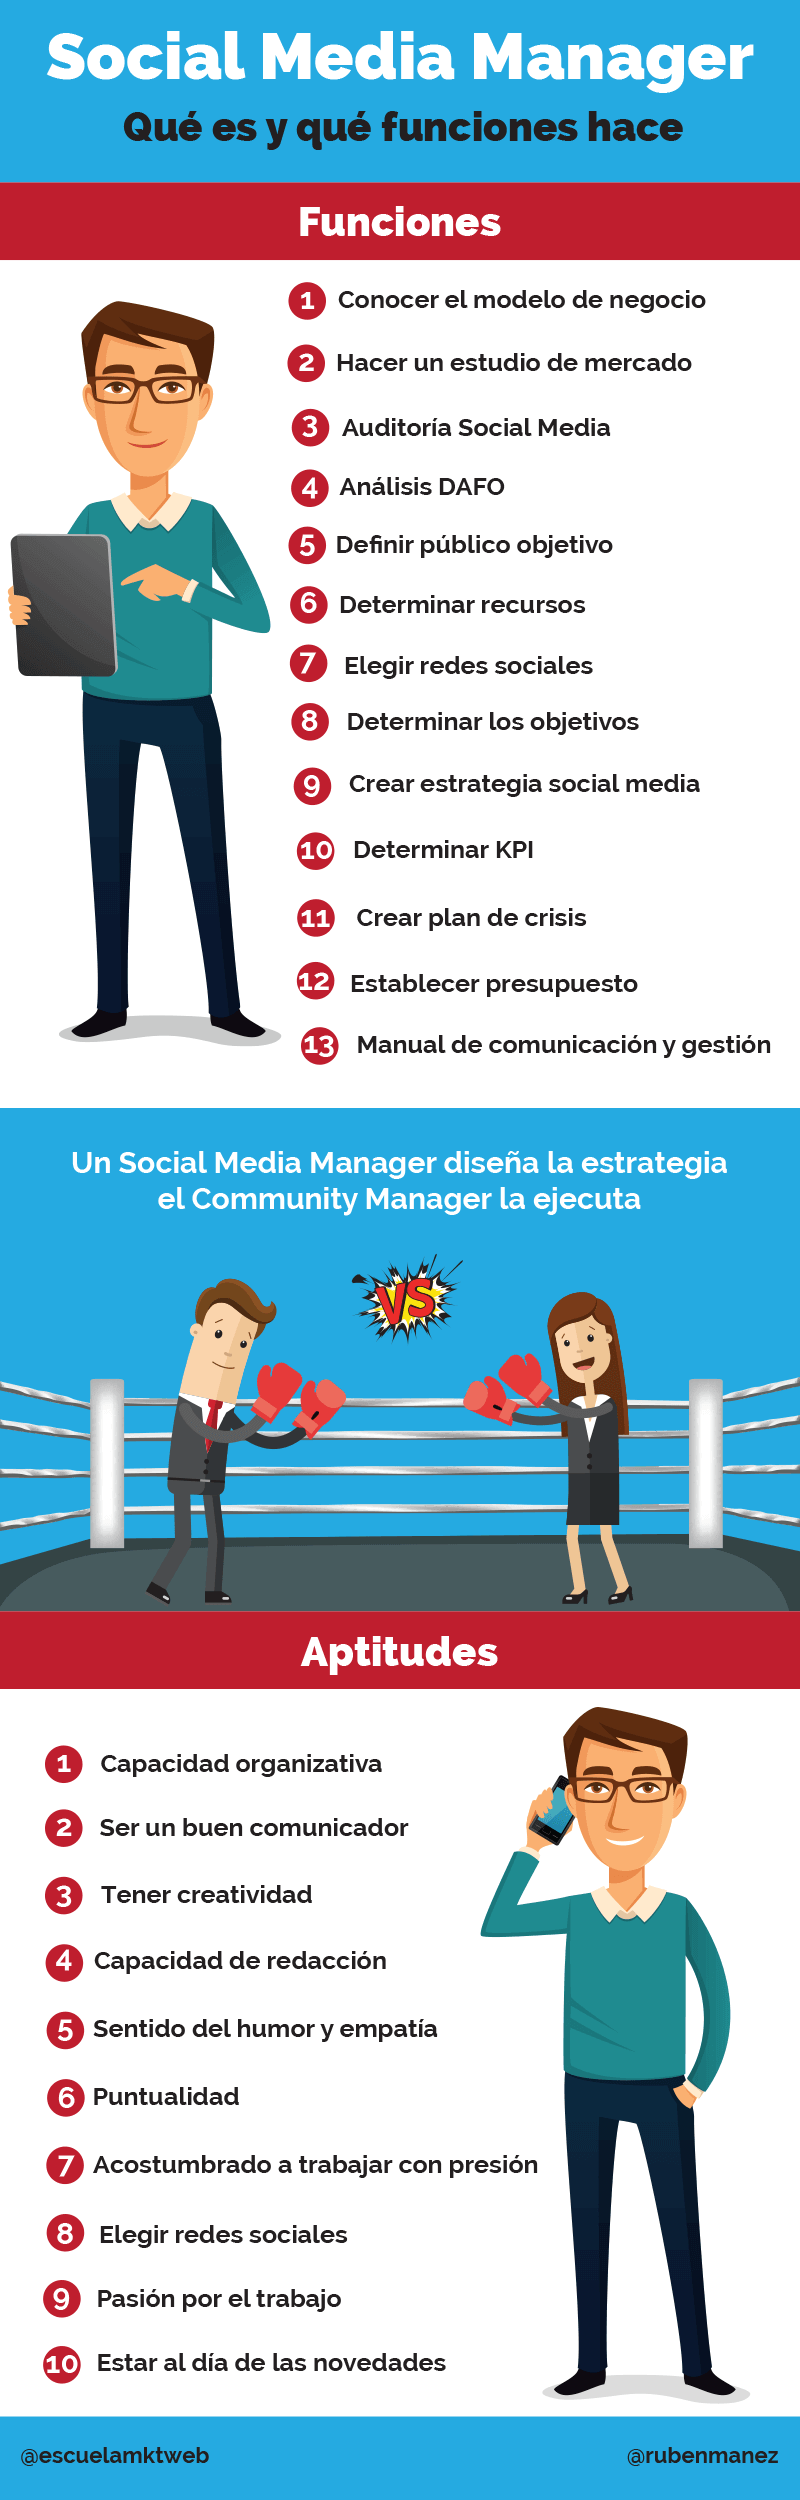 infografia social media manager